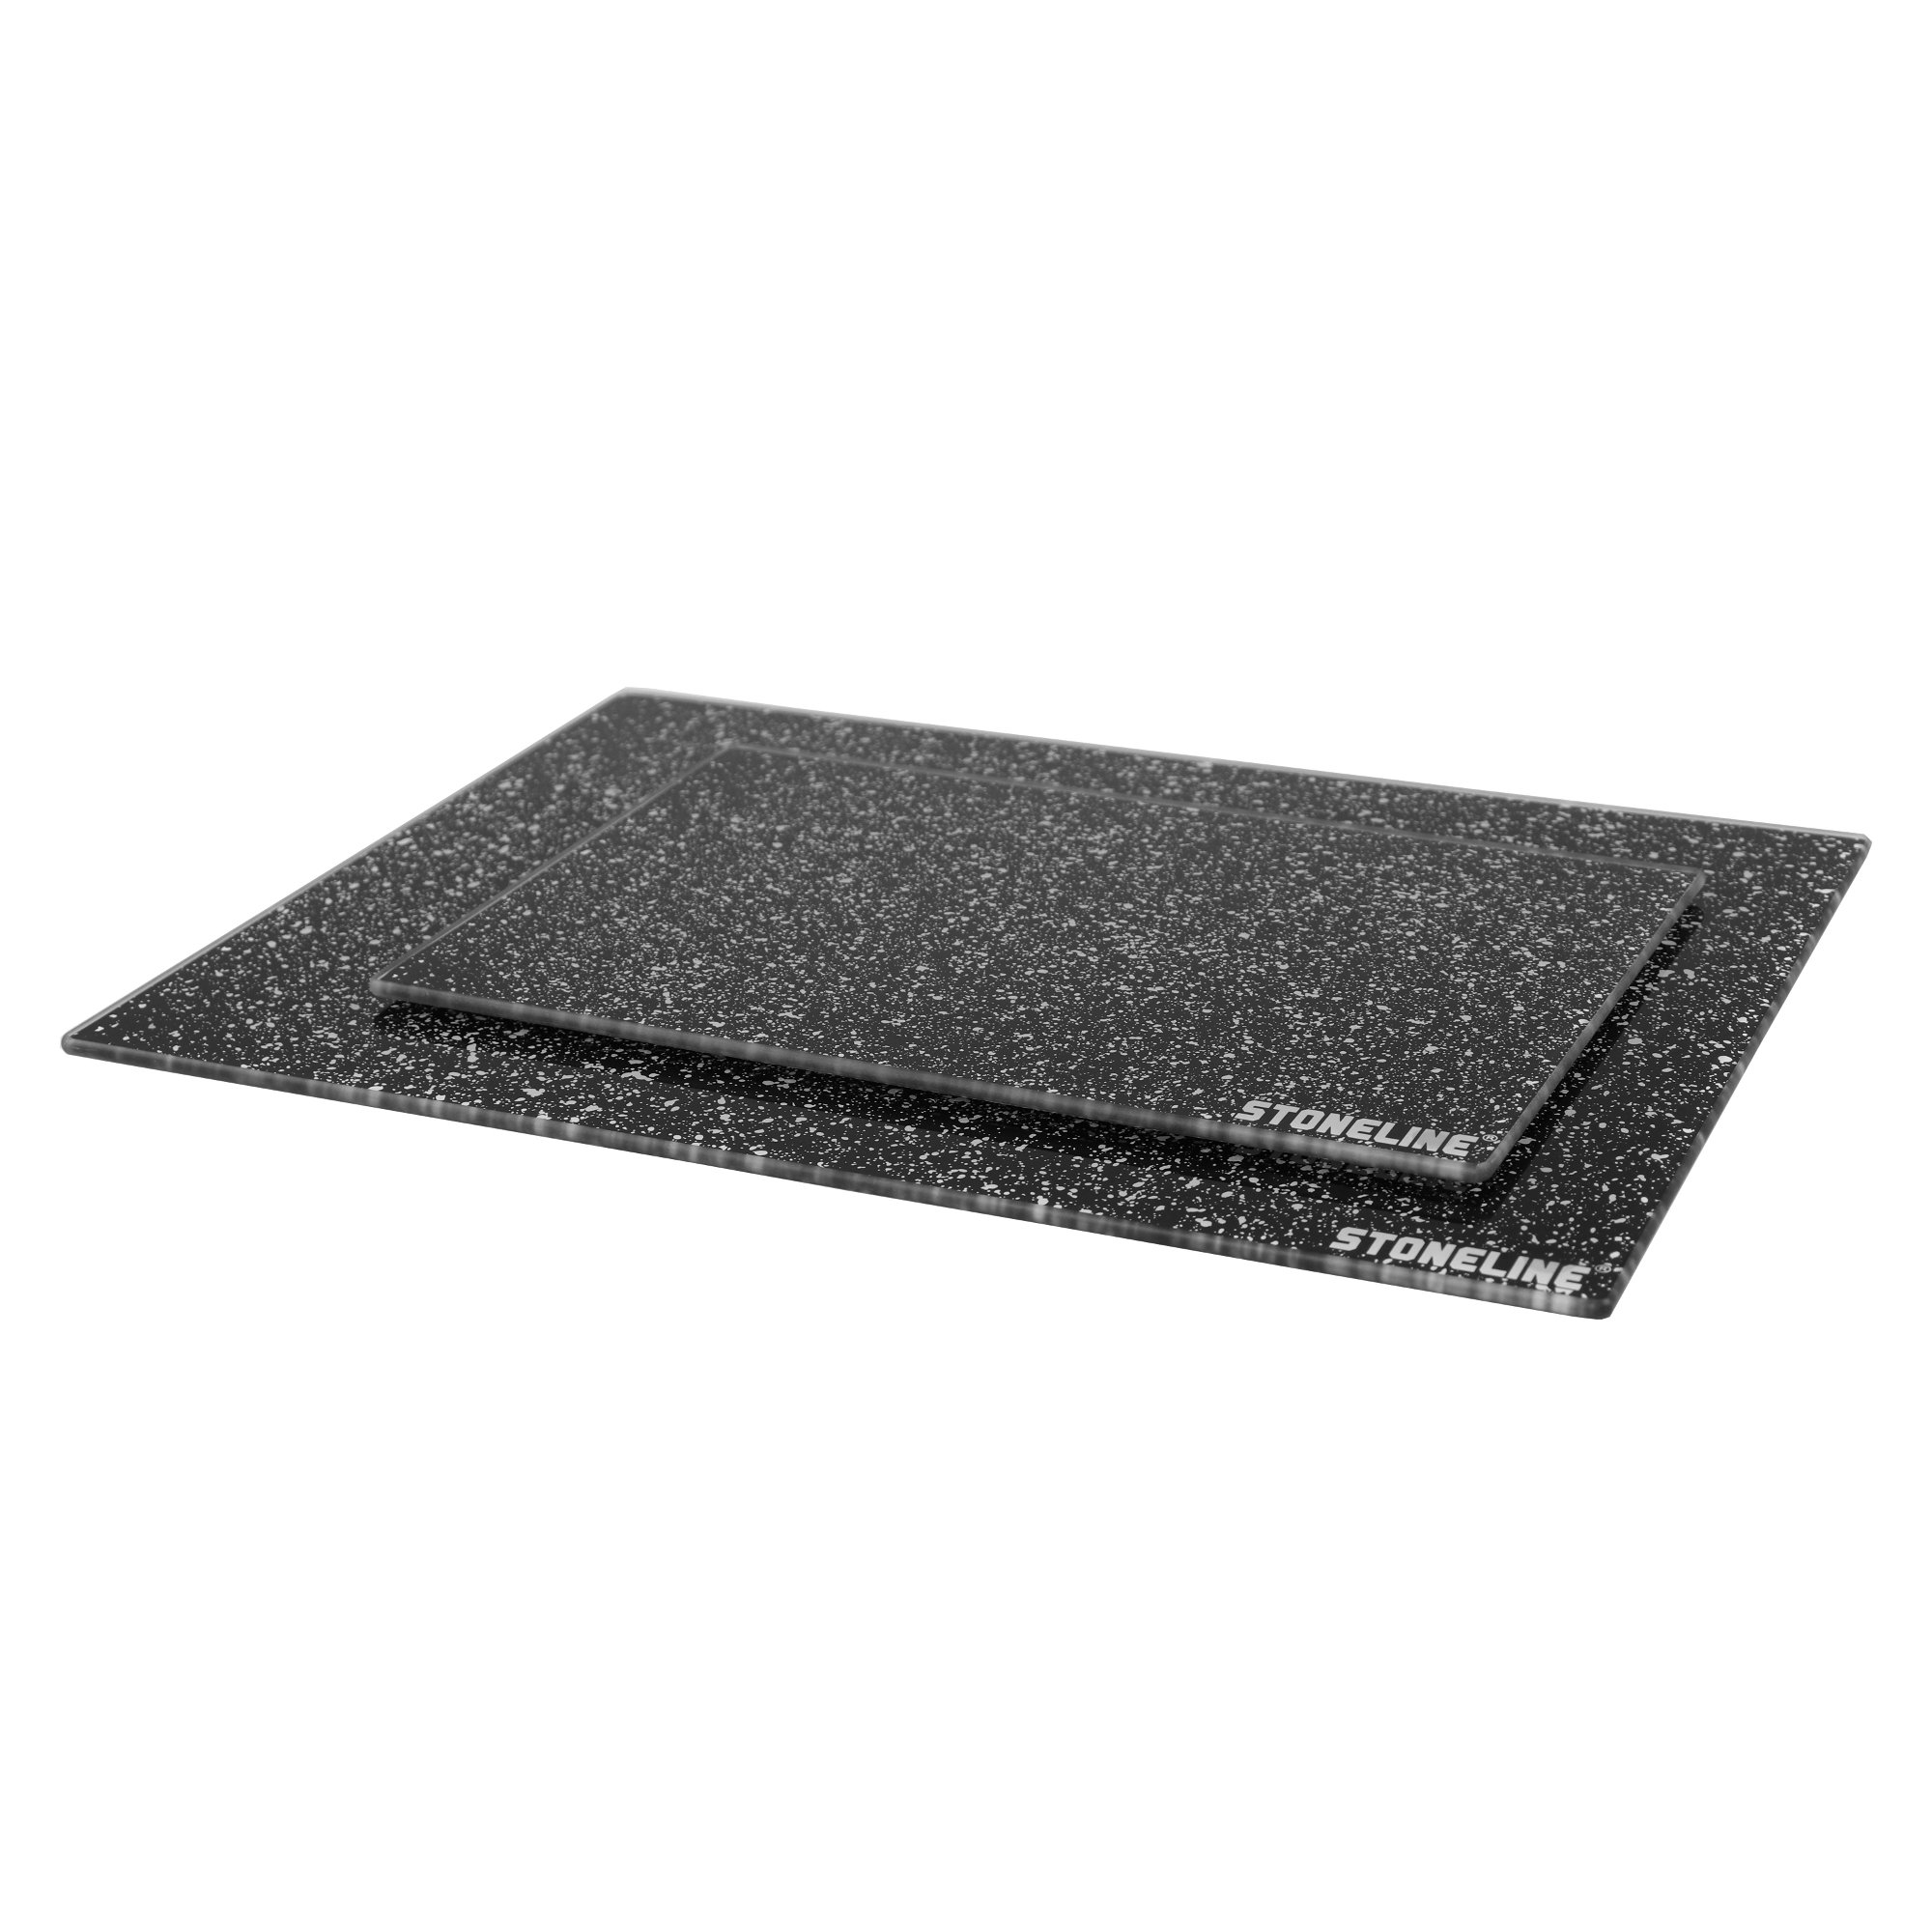 STONELINE® 2 pc Glass Cutting Board Set, Non-Slip Chopping Board, Worktop Saver